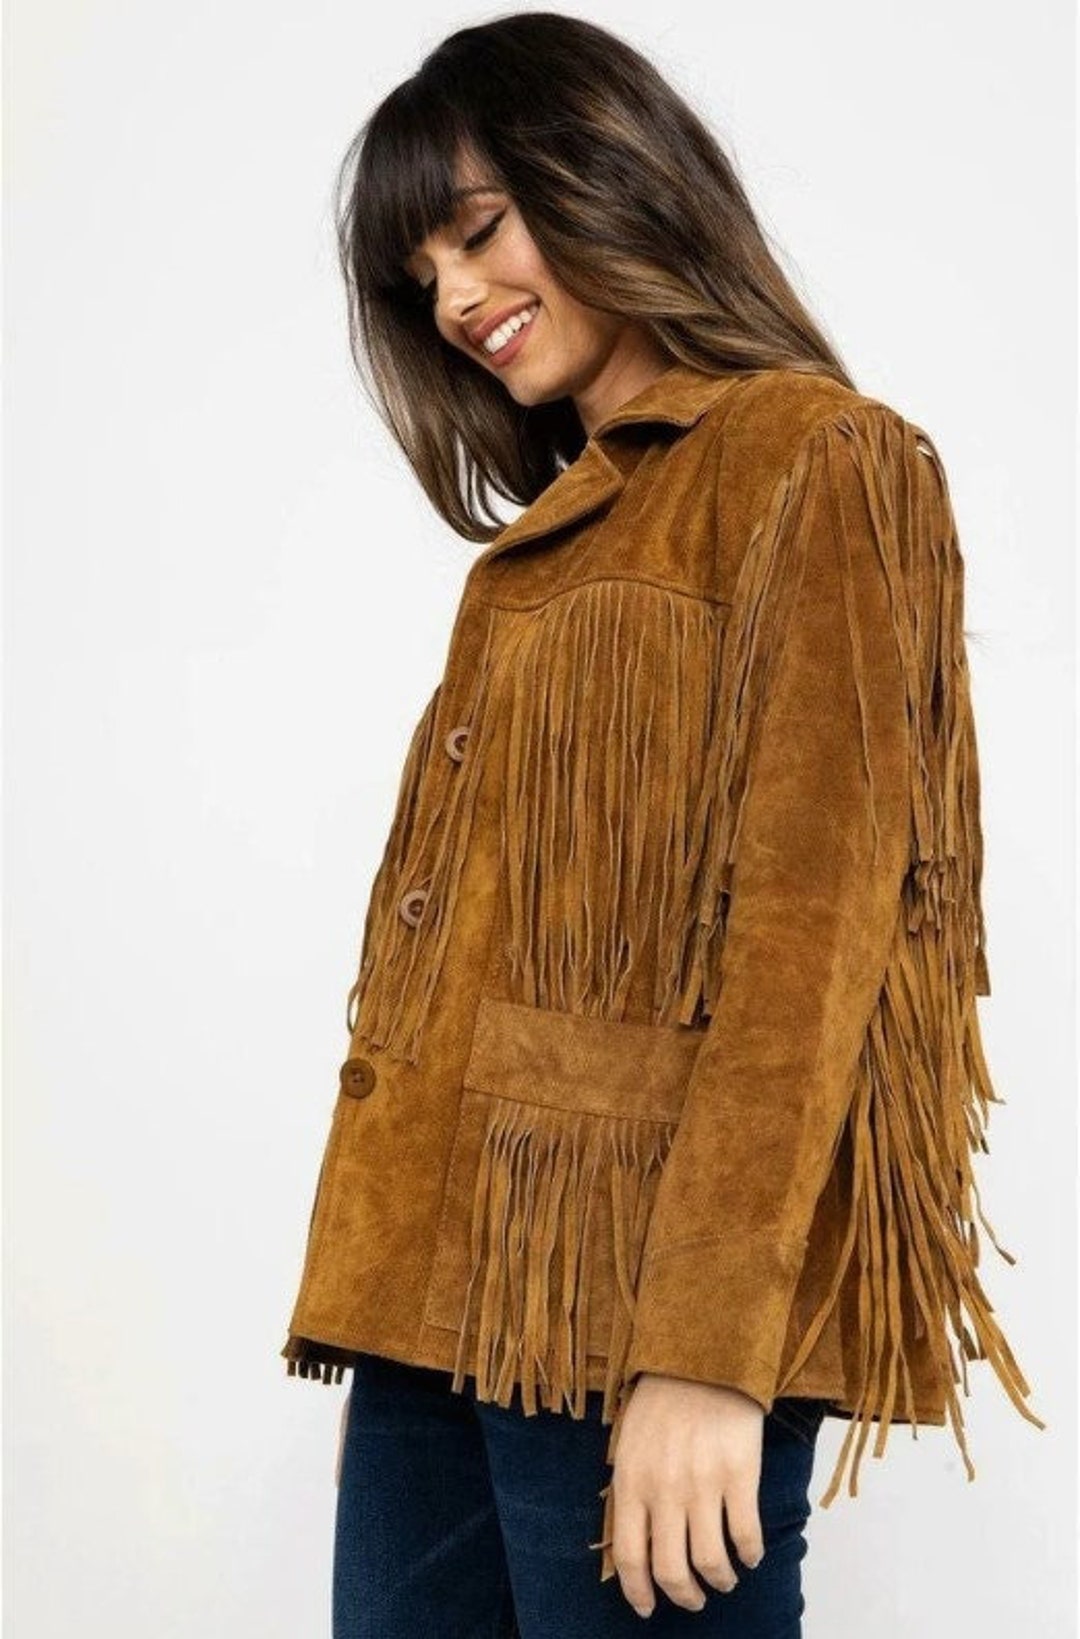 Women's Vintage Fringe Leather Jacket Brown Suede Leather - Etsy